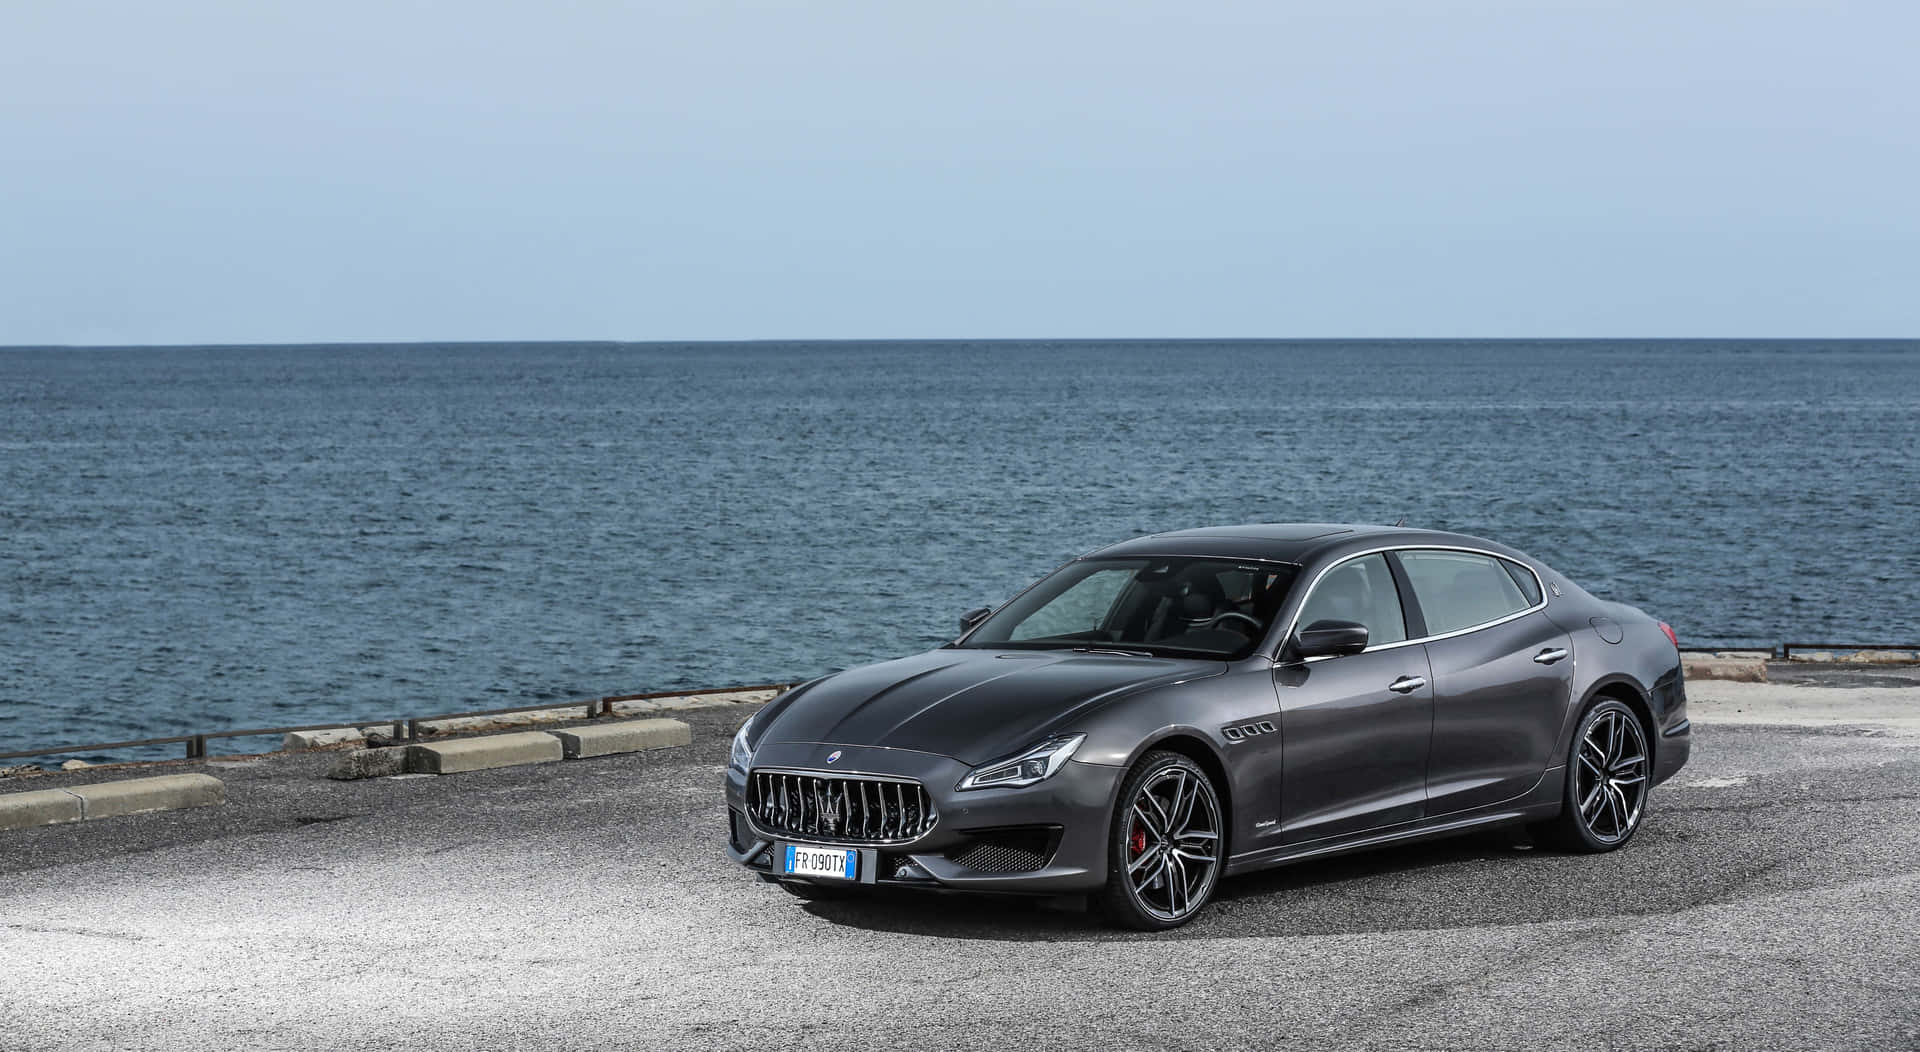 High-speed Luxury - The Maserati Quattroporte Wallpaper